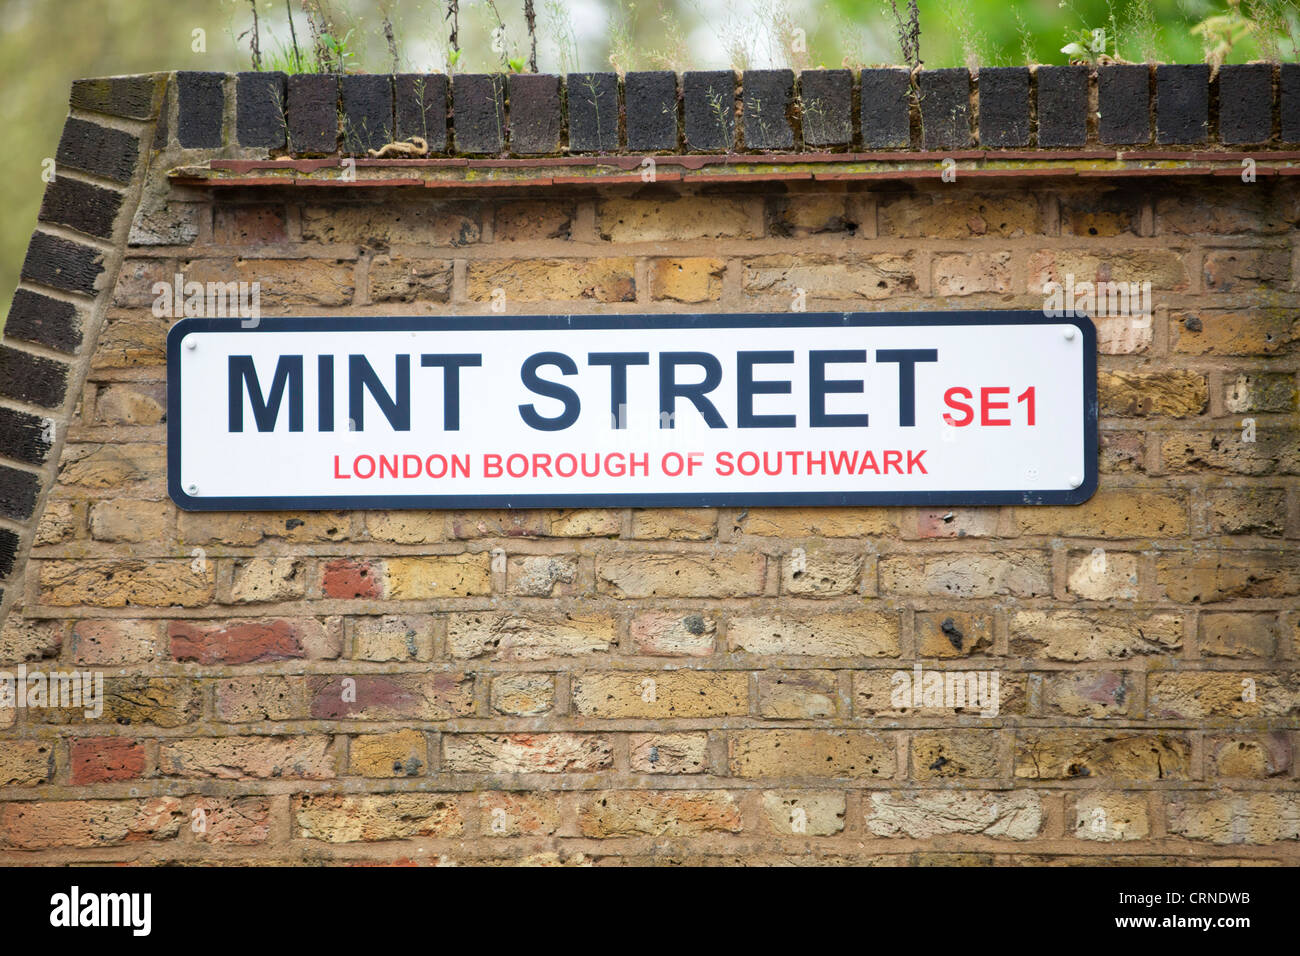 Mint Street SE1 Straßenschild in London Borough of Southwark. Stockfoto